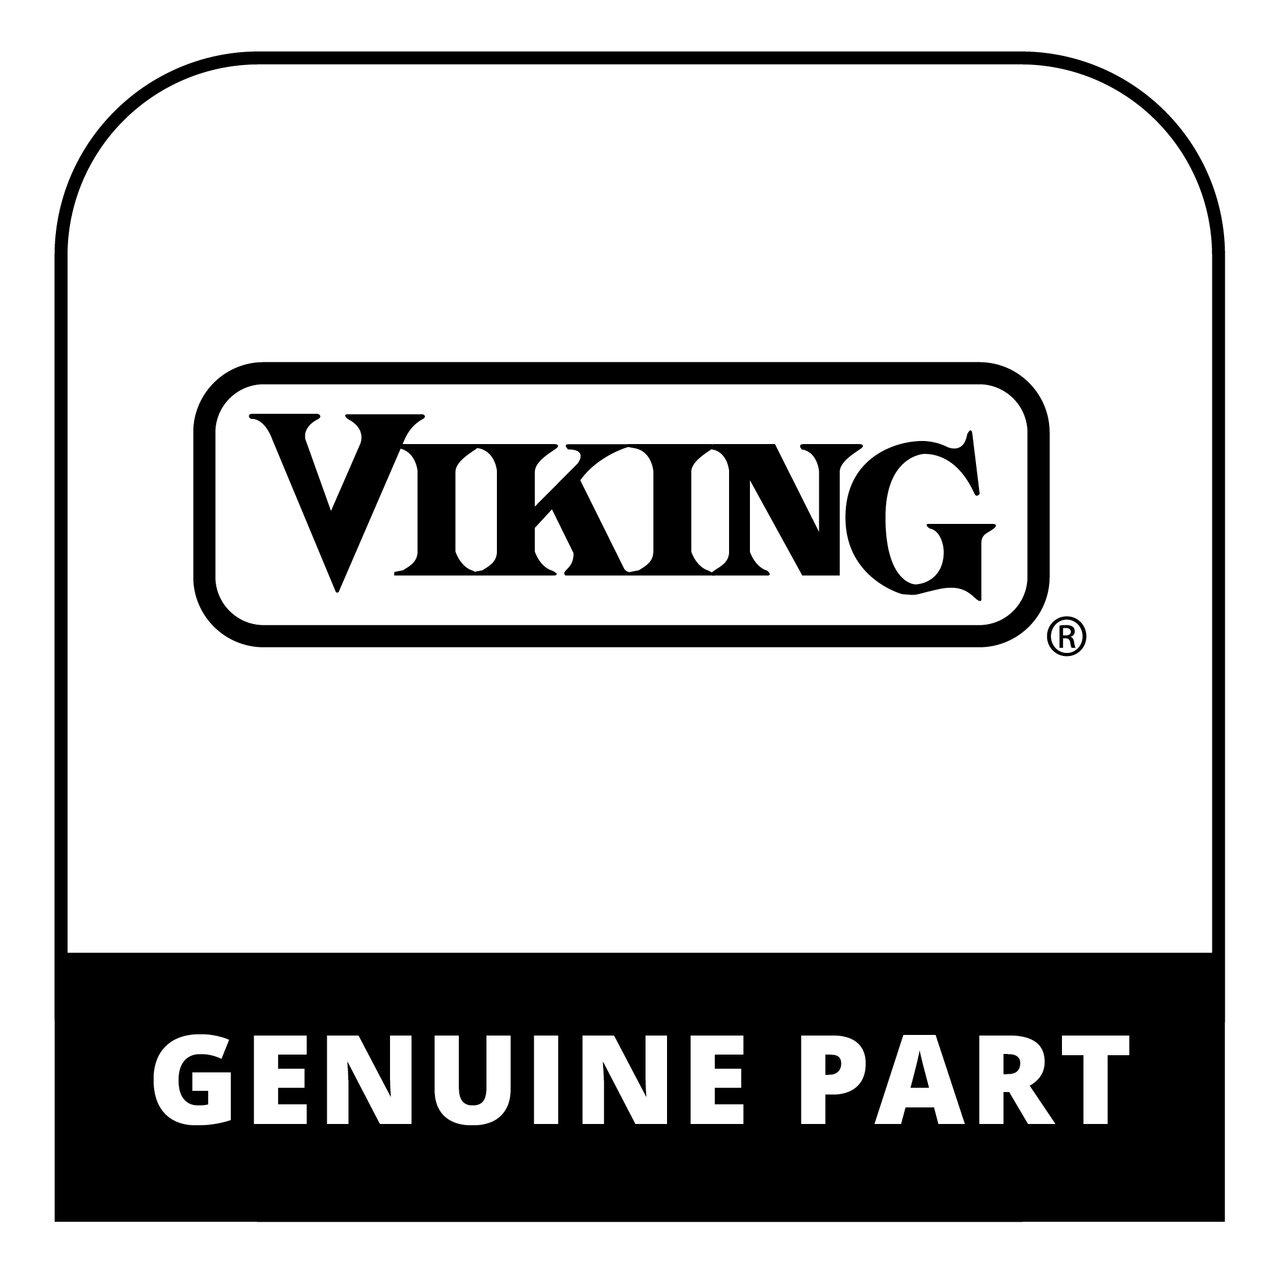 Viking LX10014 - Bullnose Body, 36 - Genuine Viking Part